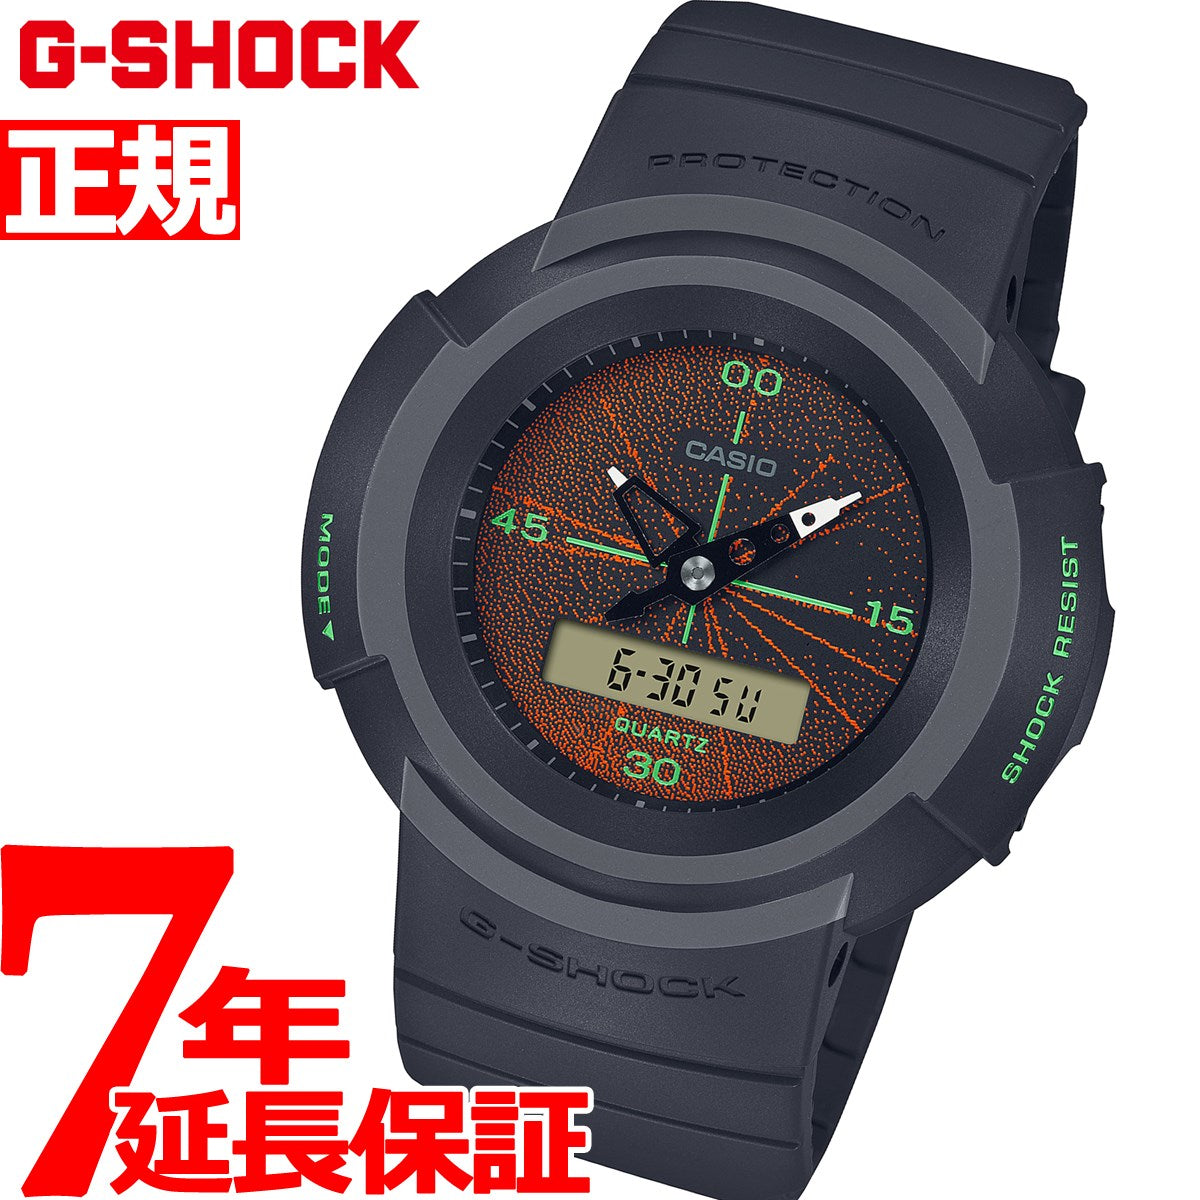 G-SHOCK Gショック カシオ 限定モデル 腕時計 メンズ AW-500MNT-1AJR 20気圧防水 アナデジ クオーツ CASIO MUSIC  NIGHT TOKYO